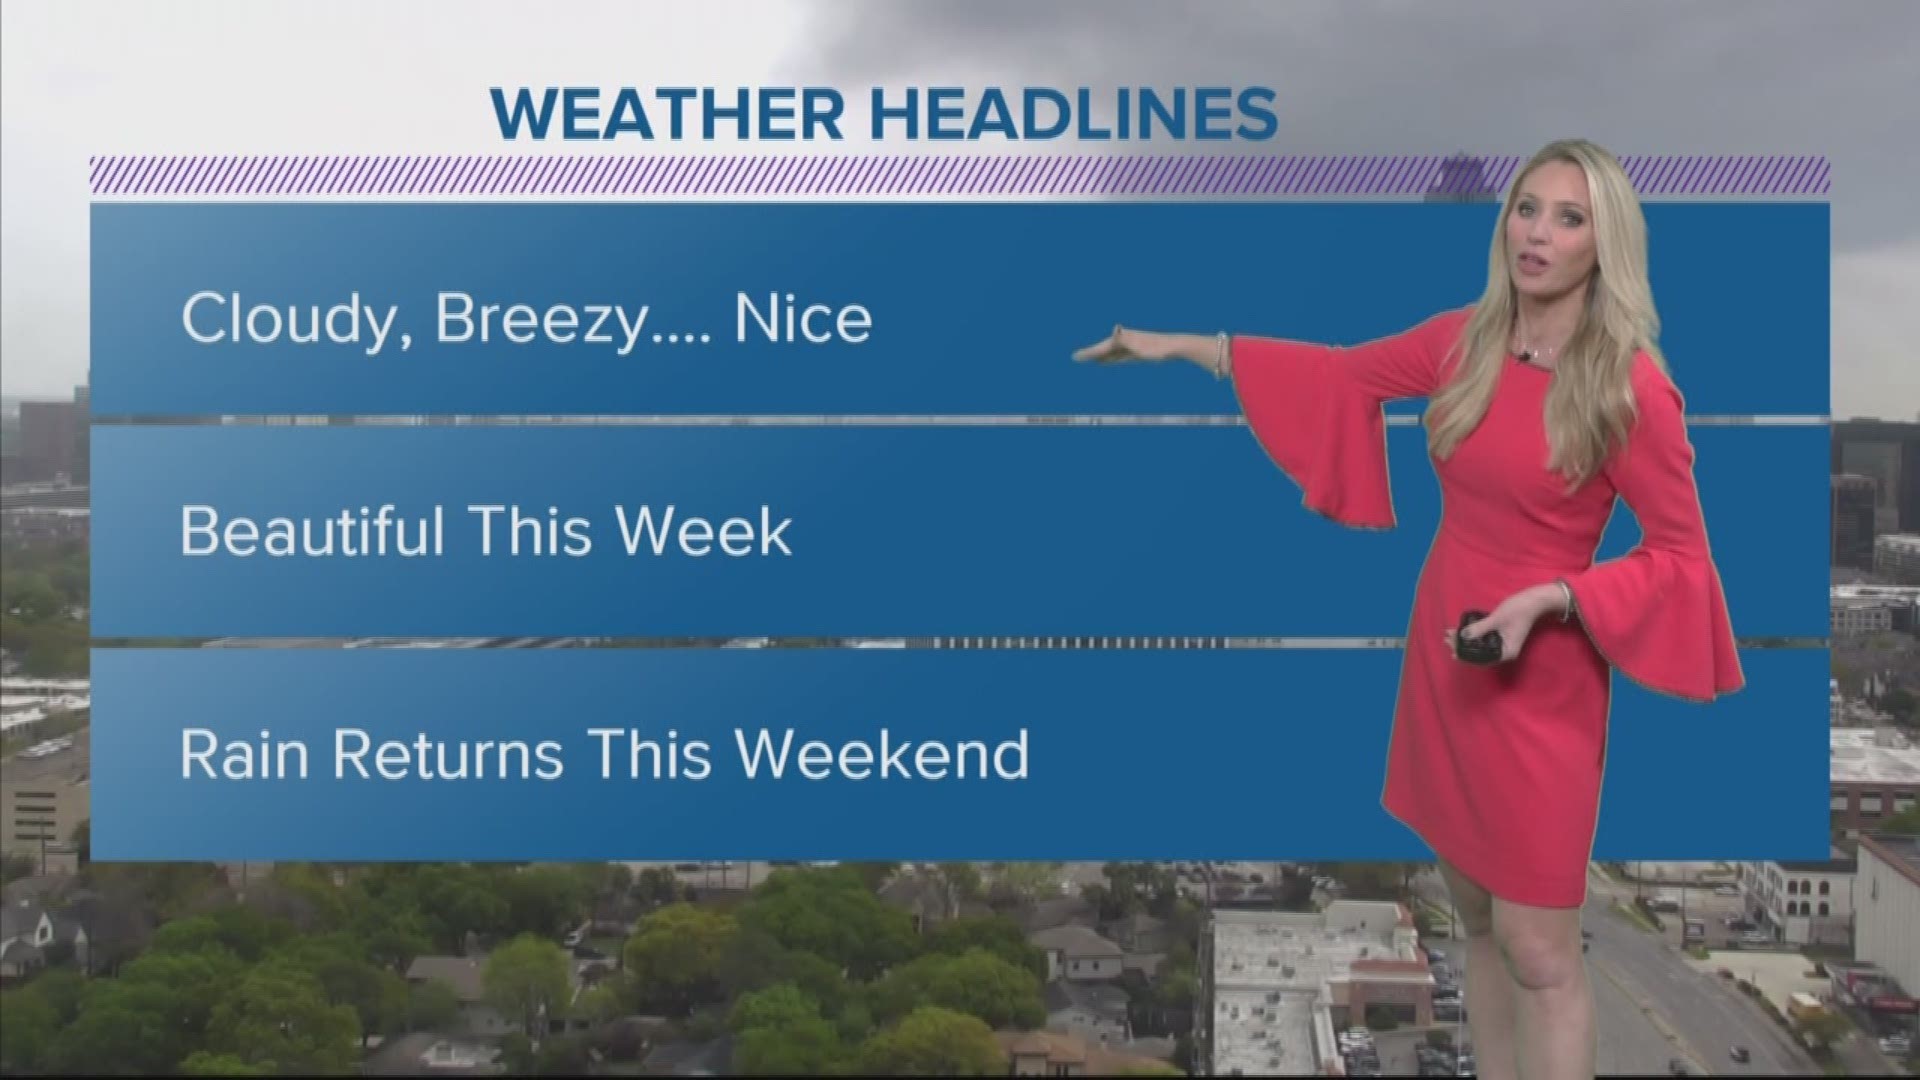 Temperatures begin to warm up this week before rain returns this weekend.